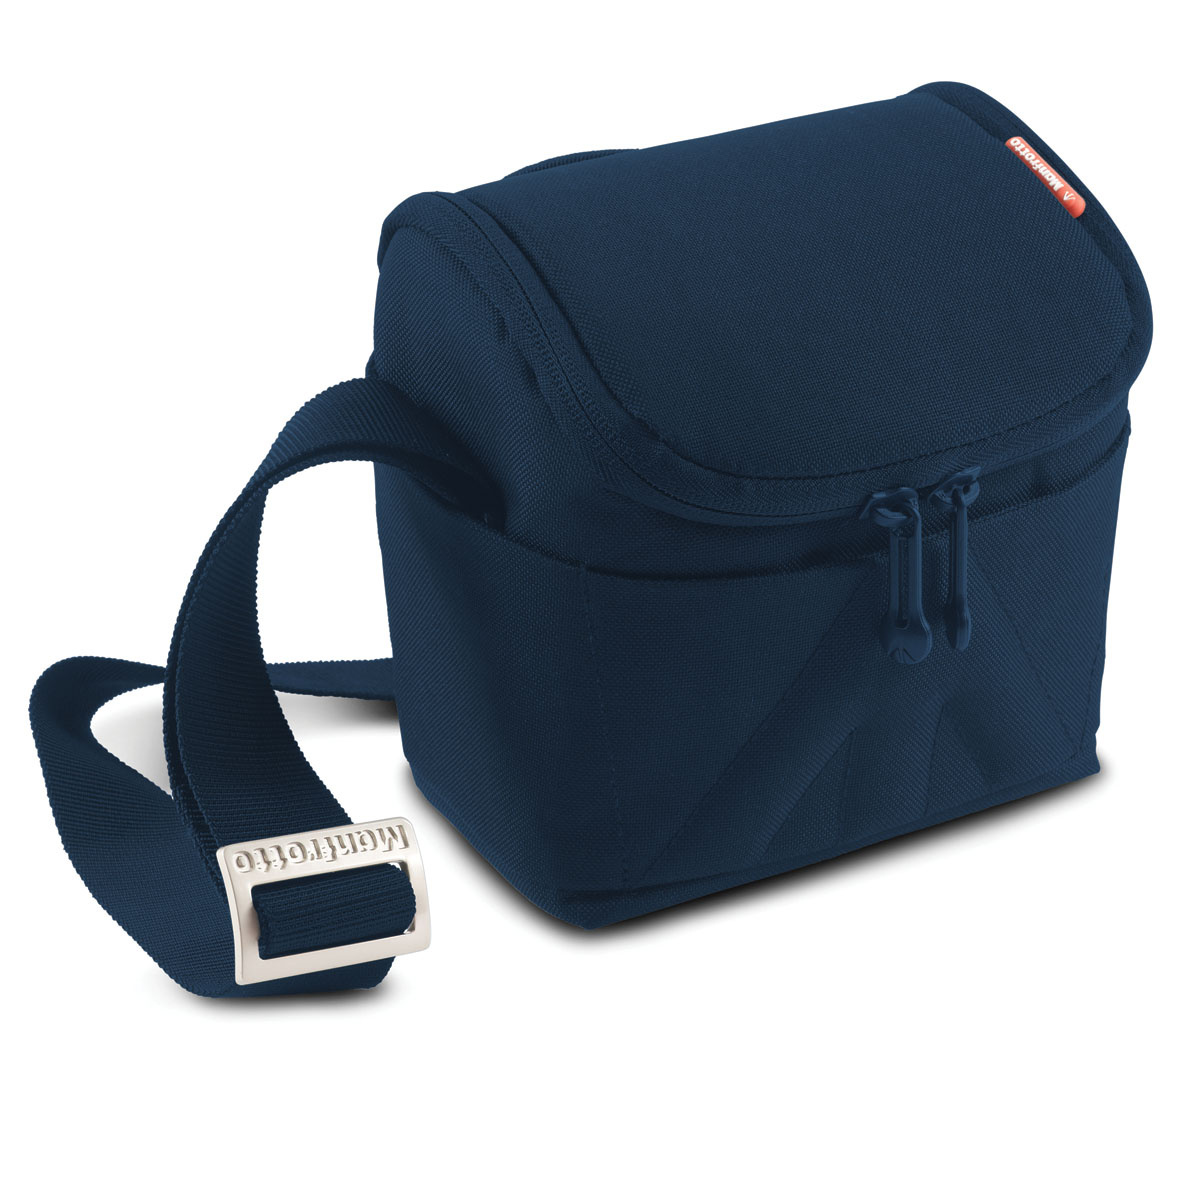 Manfrotto Amica 10 Shoulder Bag - Blue